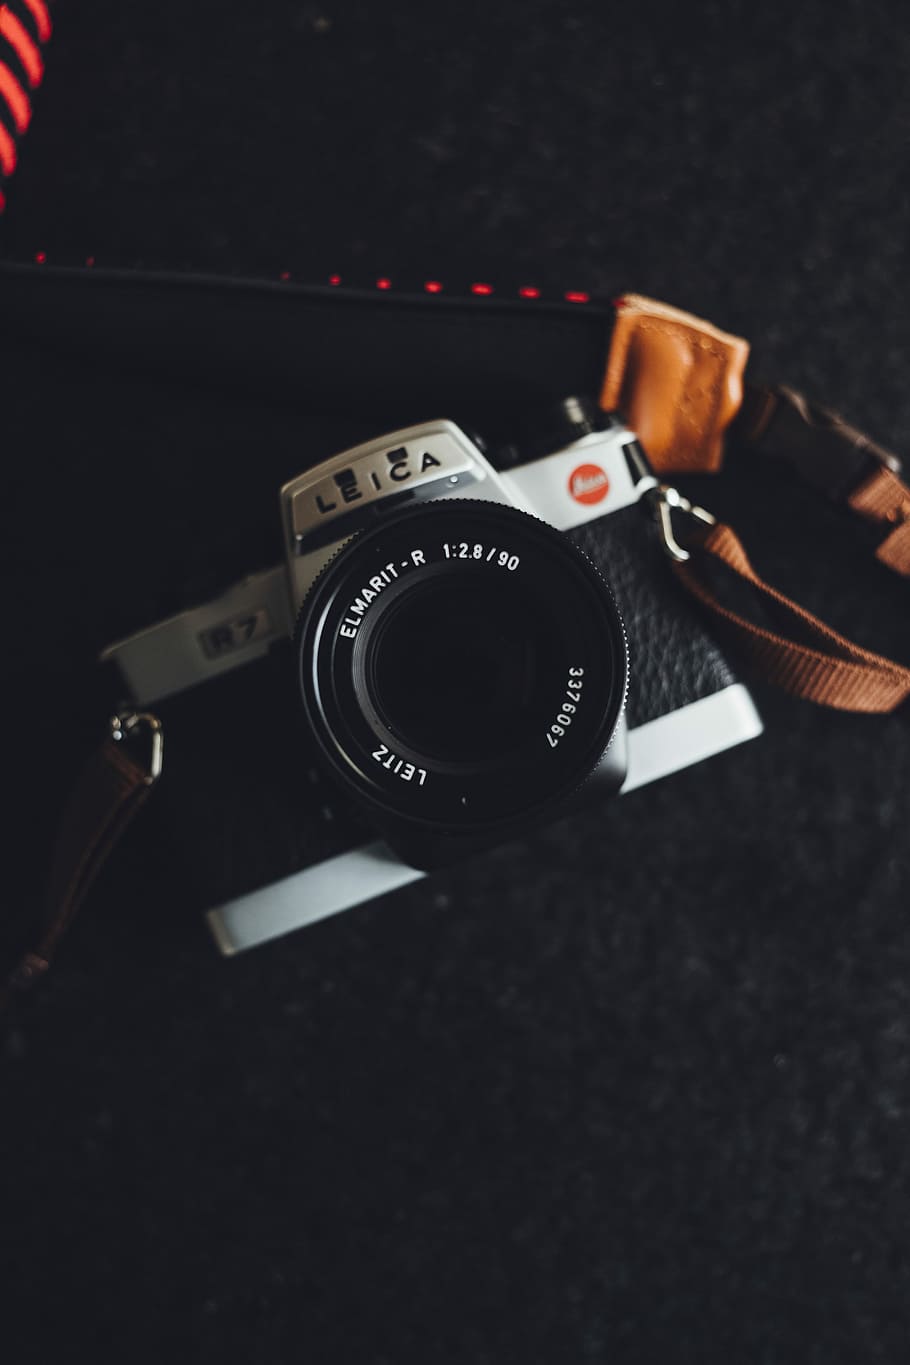 Black And Gray Leica Bridge Camera With Brown Sling - Lock Screen Wallpaper Hd For Iphone - HD Wallpaper 